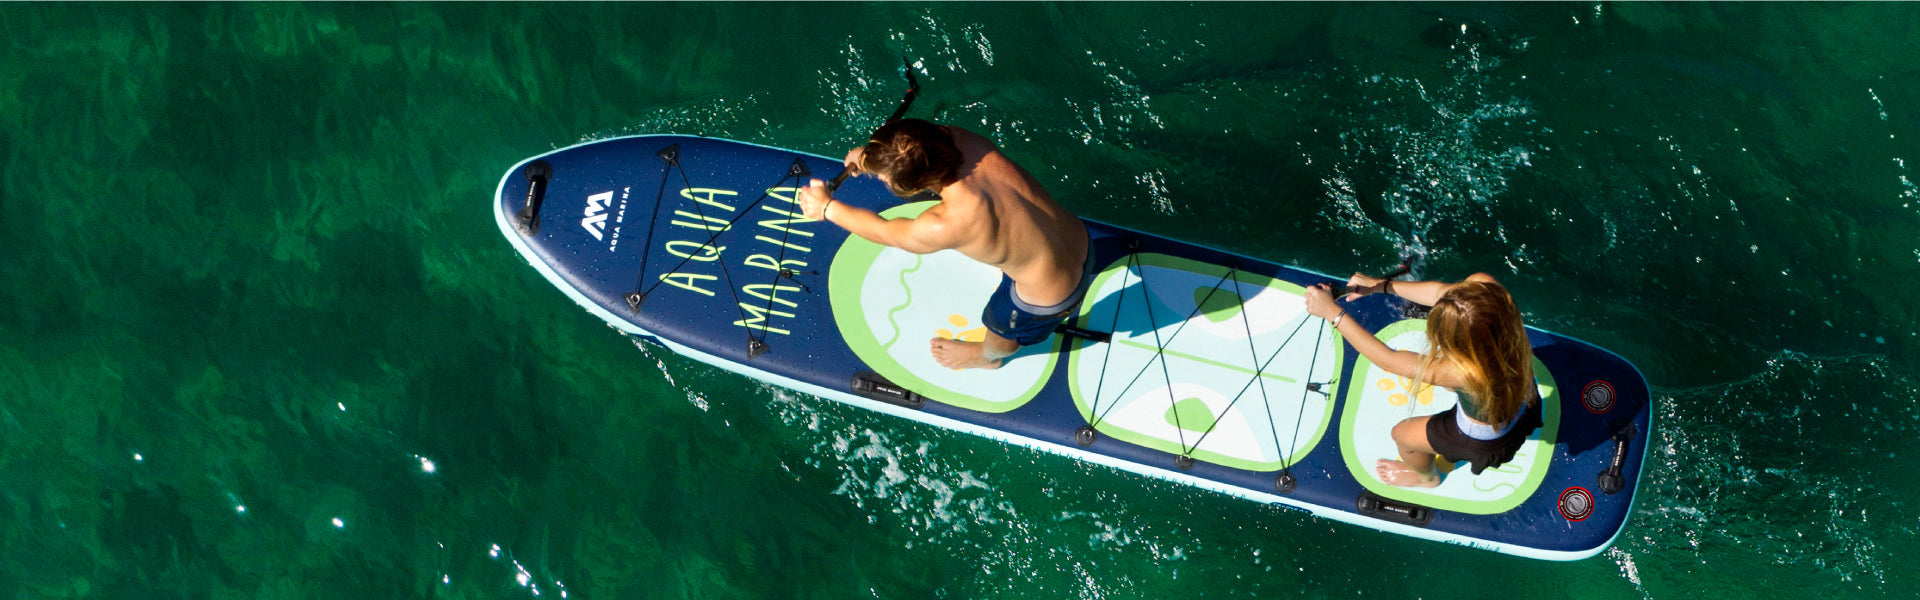 Aqua Marina Super Trip Tandem 14' Inflatable SUP Paddleboard